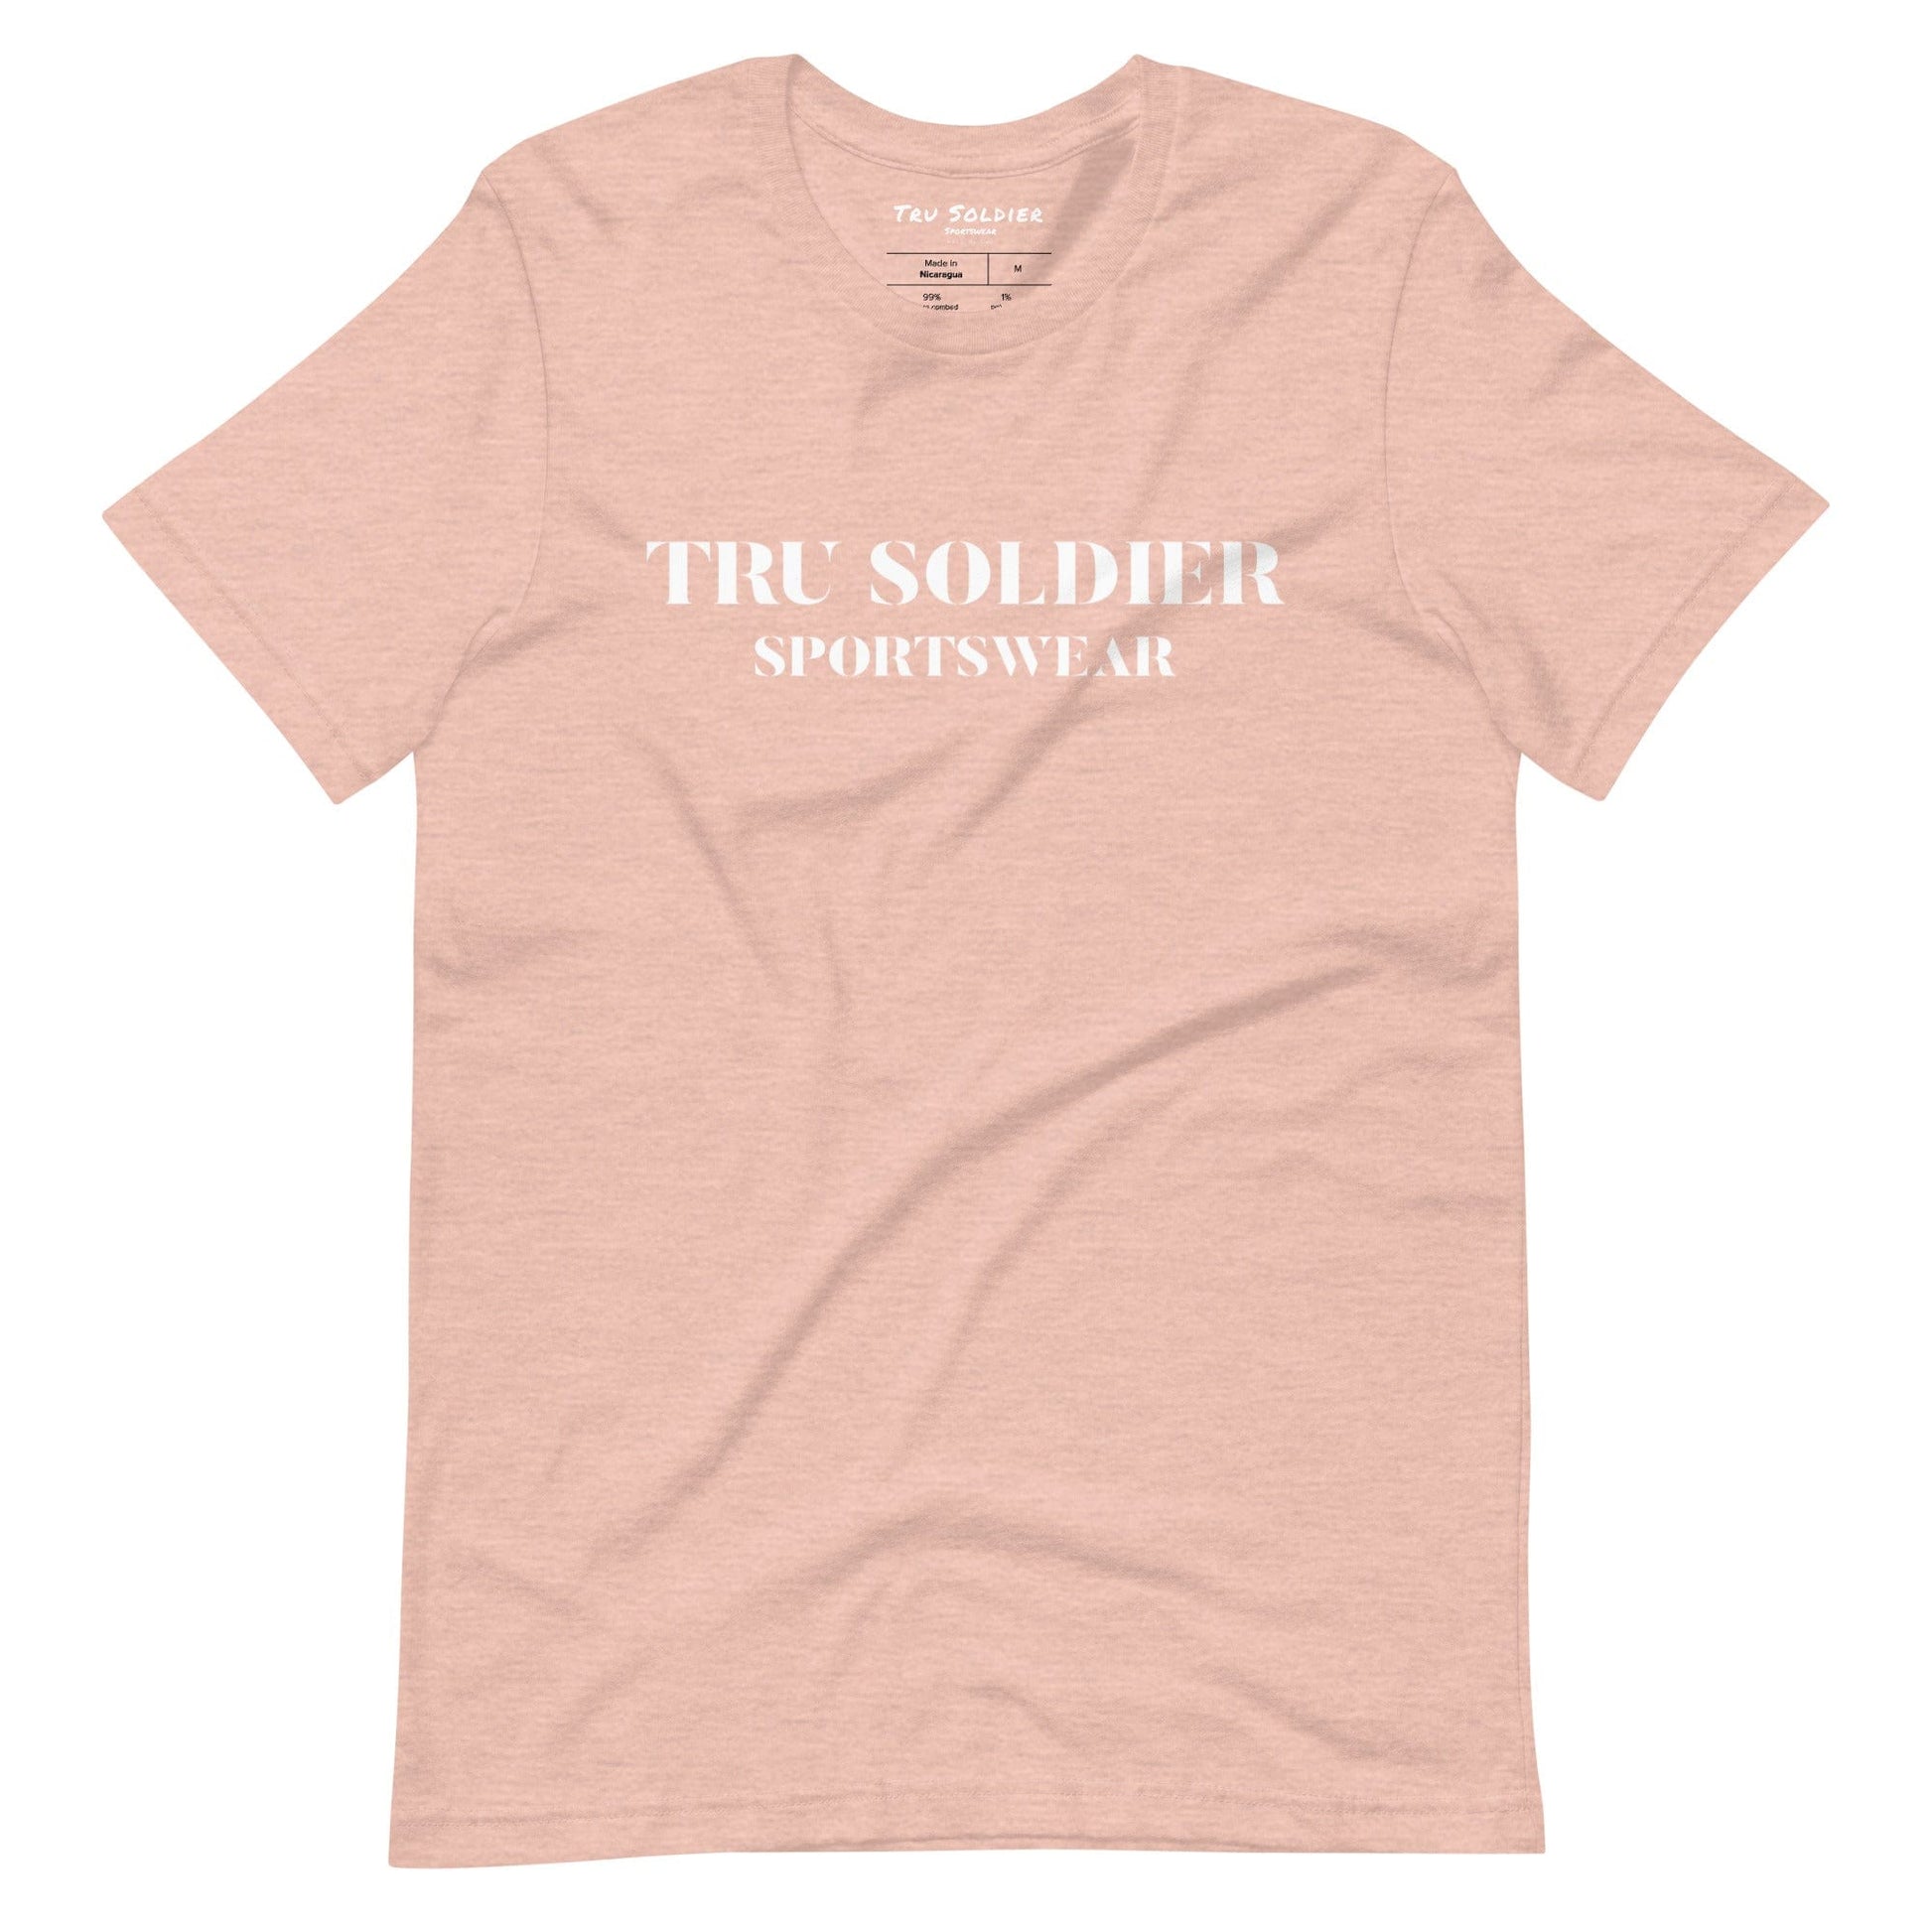 Tru Soldier Sportswear  Heather Prism Peach / XS Tru Soldier Sportswear t-shirt